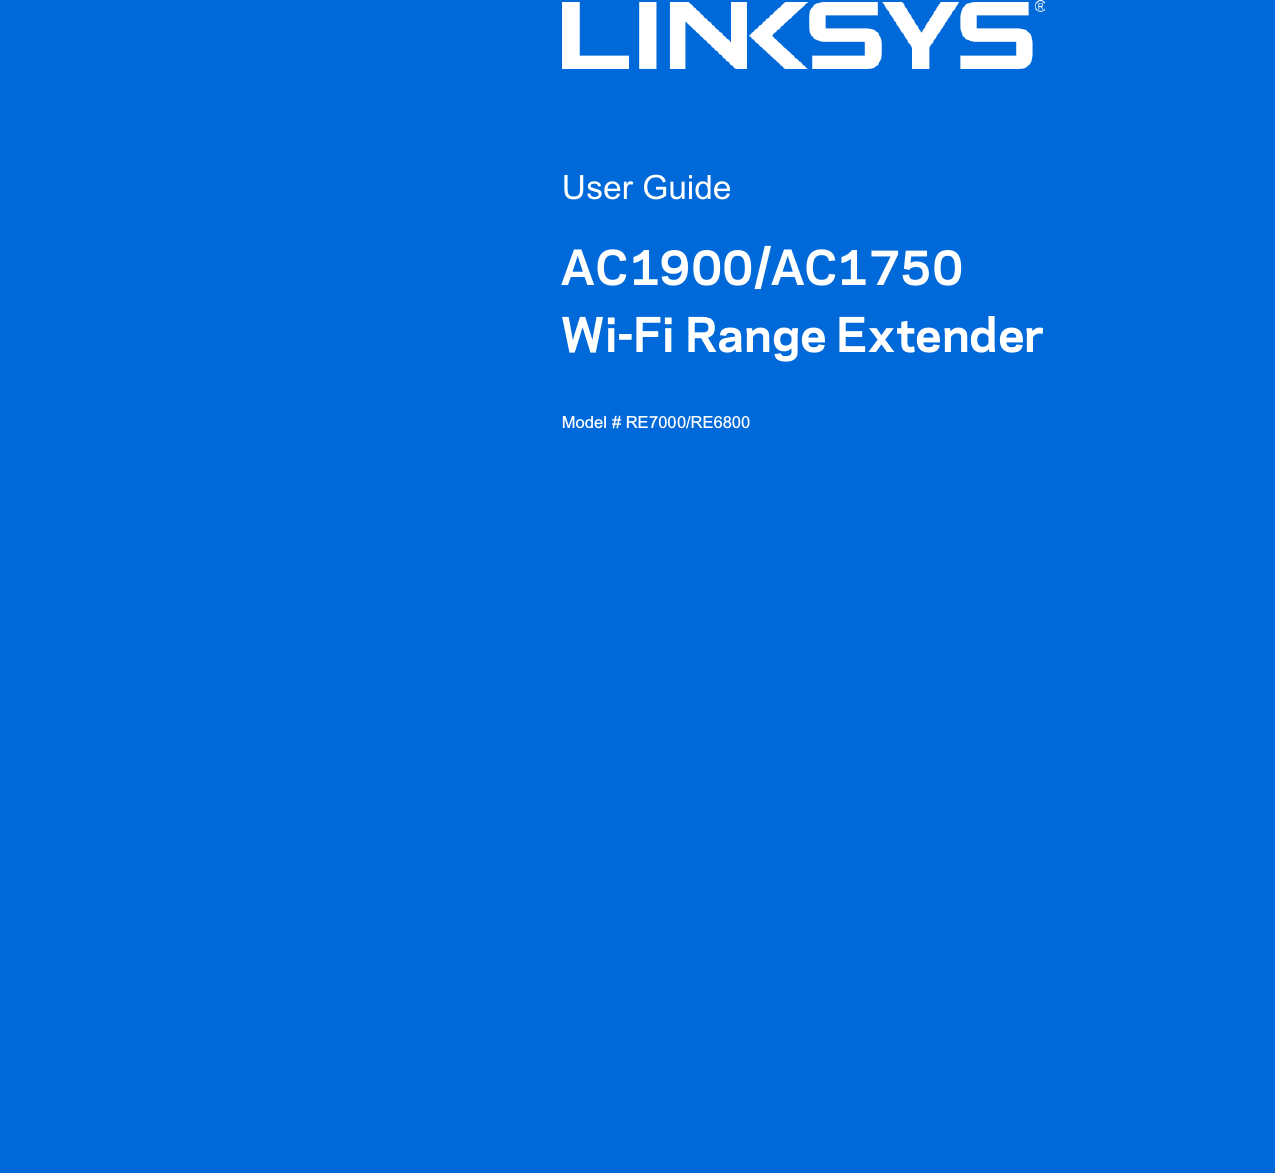              User Guide    AC1900/AC1750 Wi-Fi Range Extender  Model # RE7000/RE6800   1  